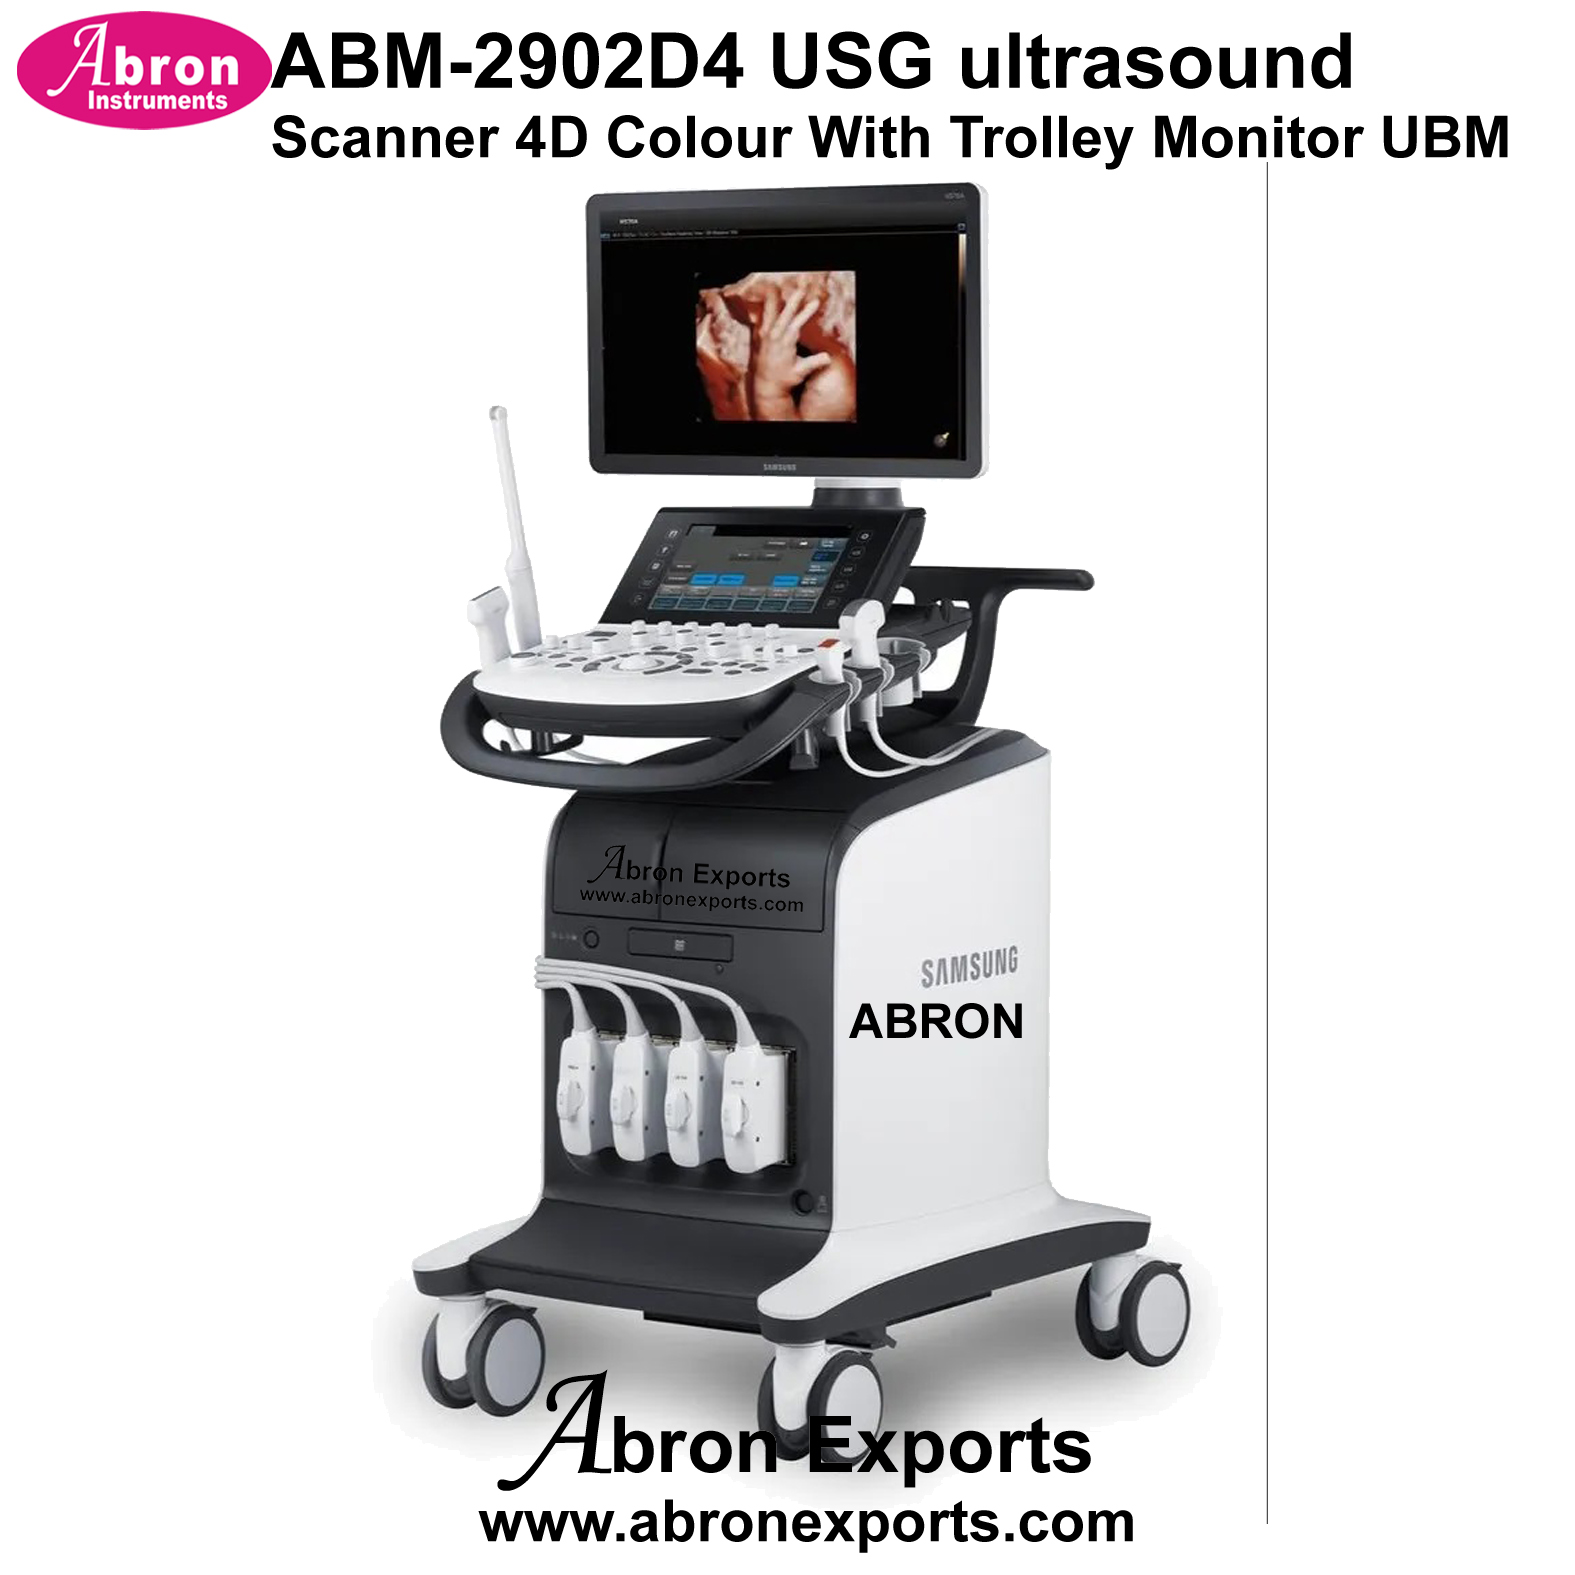 USG ultrasound scanner 3D or 4D Colour with trolley monitor scan -HLhs70a-samsung Machine USG Hospital Medical Abron ABM-2902D3 